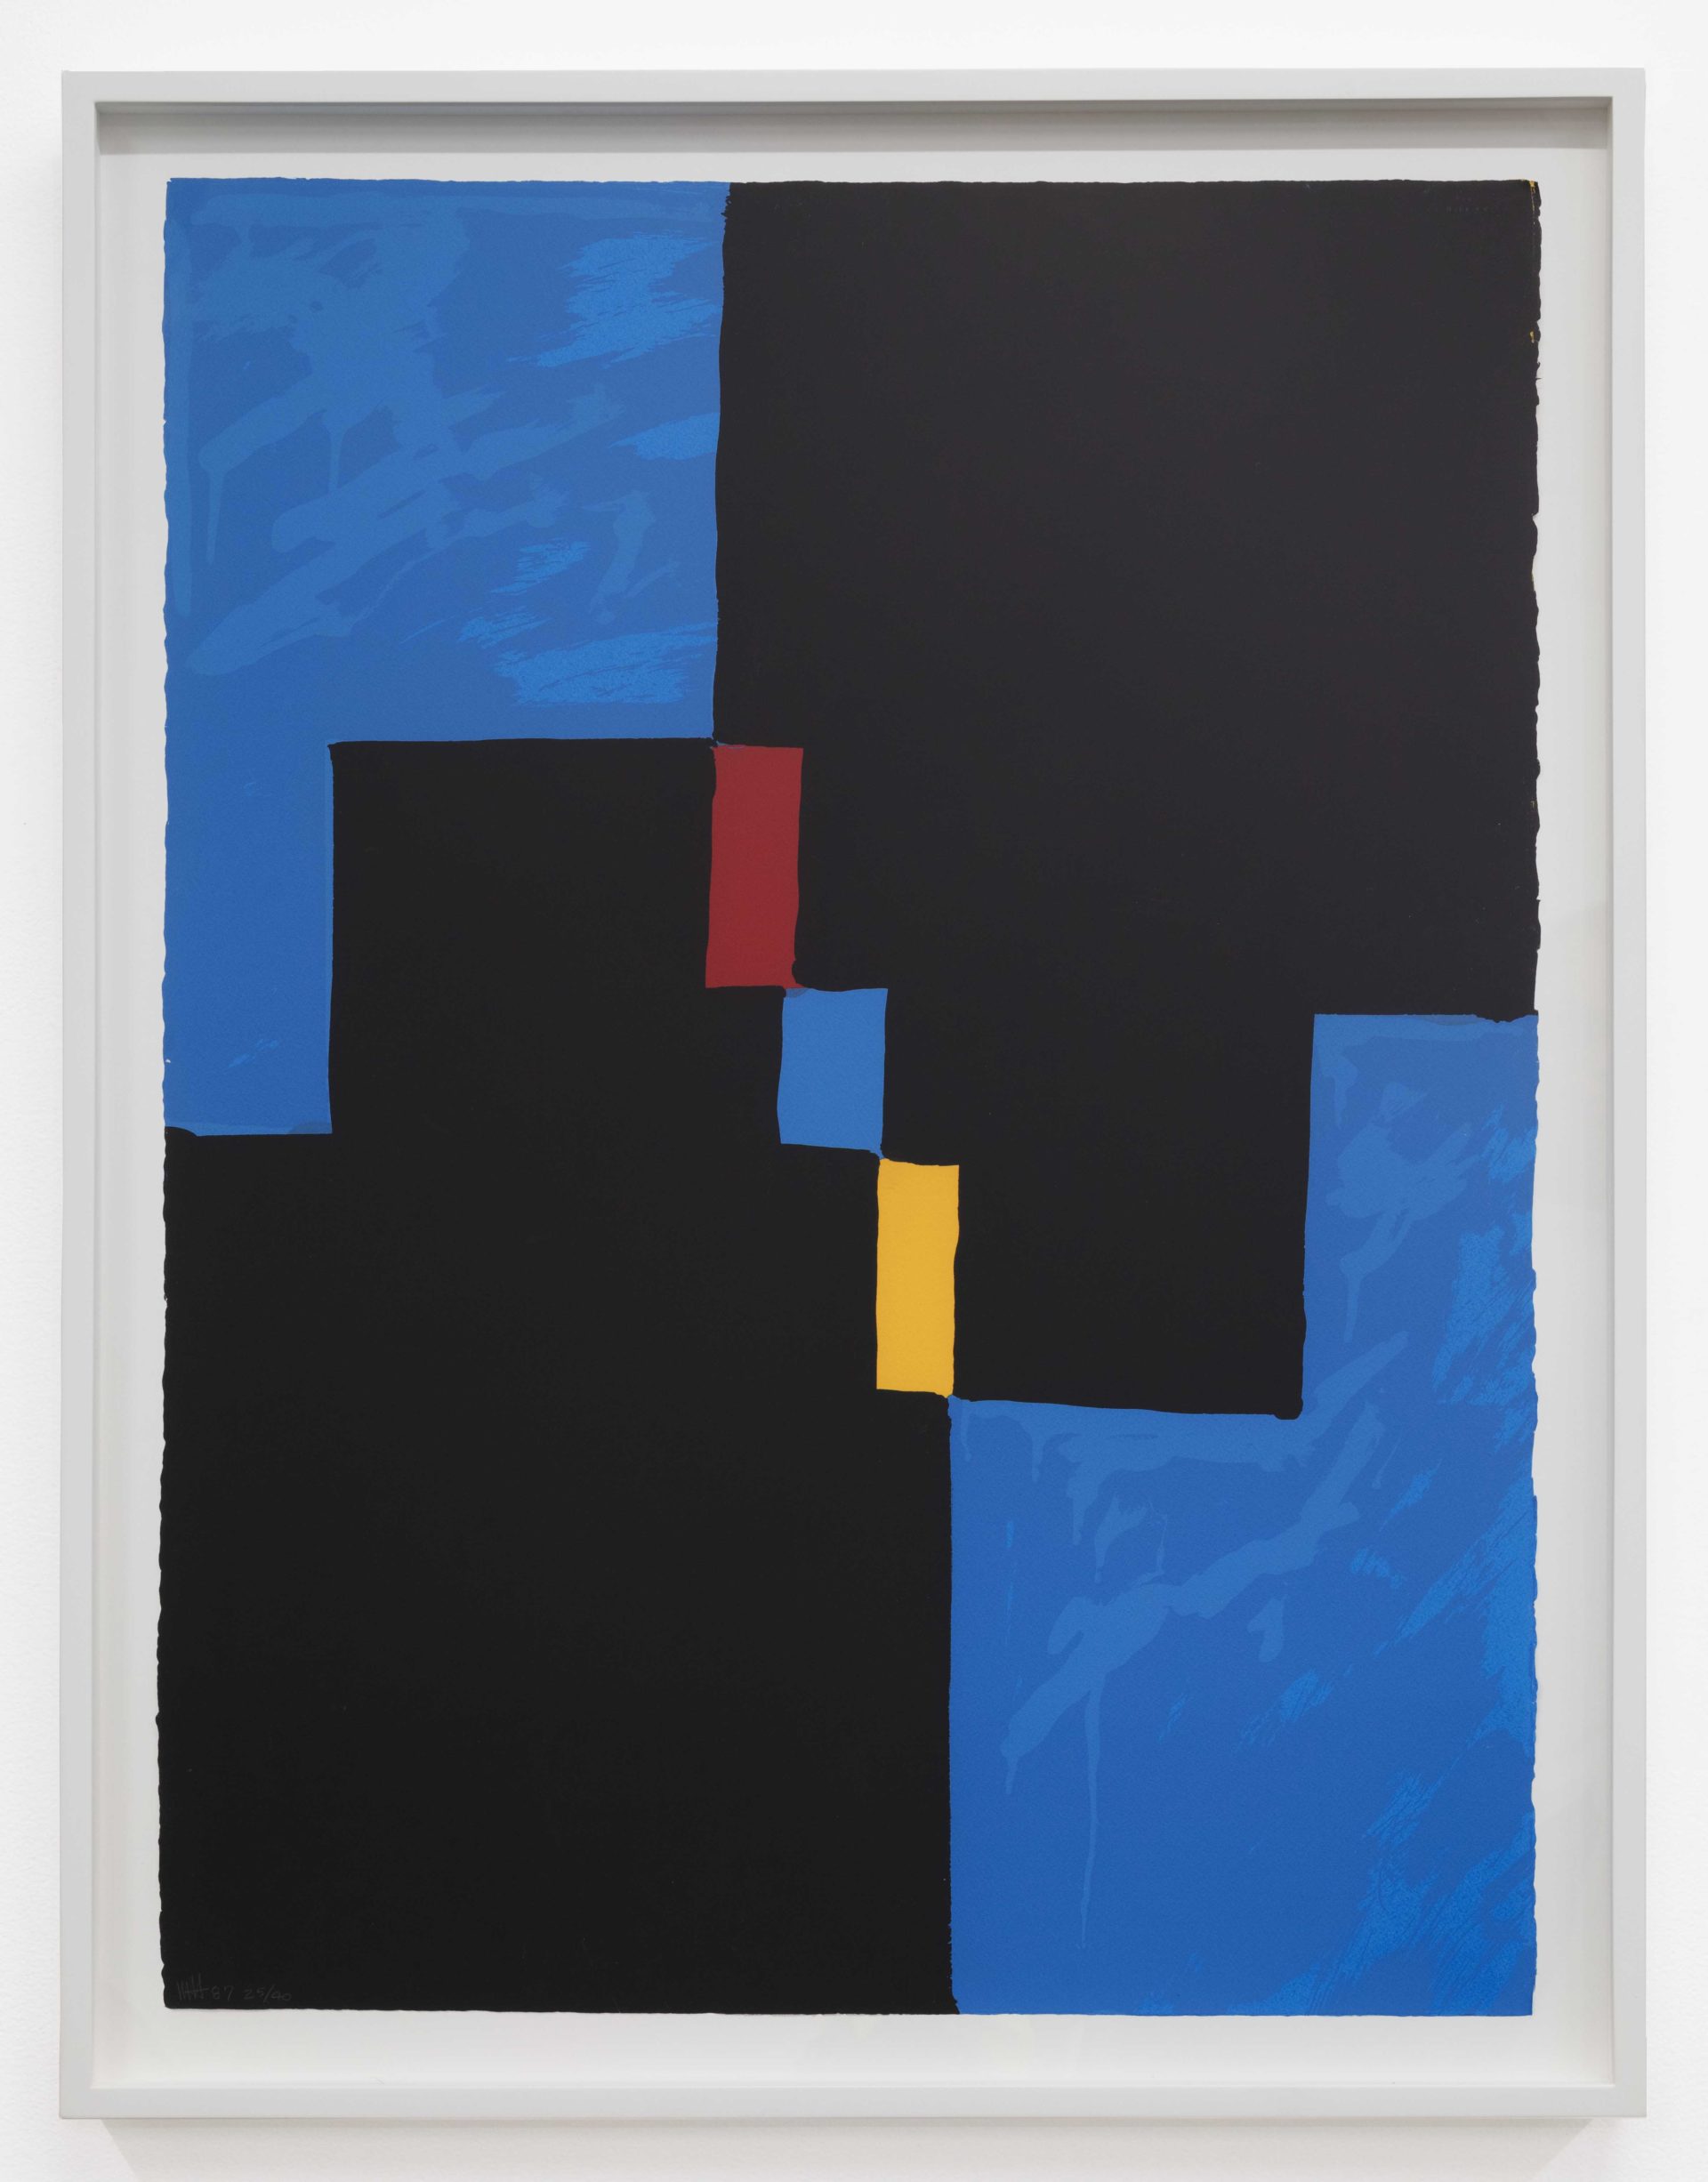 Mary Heilmann Saturday Night, 1987 Silkscreen 29 7/8 x 22 1/2 inches (75.9 x 57.2 cm) Framed Dimensions: 33 3/16 x 25 5/8 inches (84.3 x 65.1 cm) Edition 25 of 40, plus 7AP